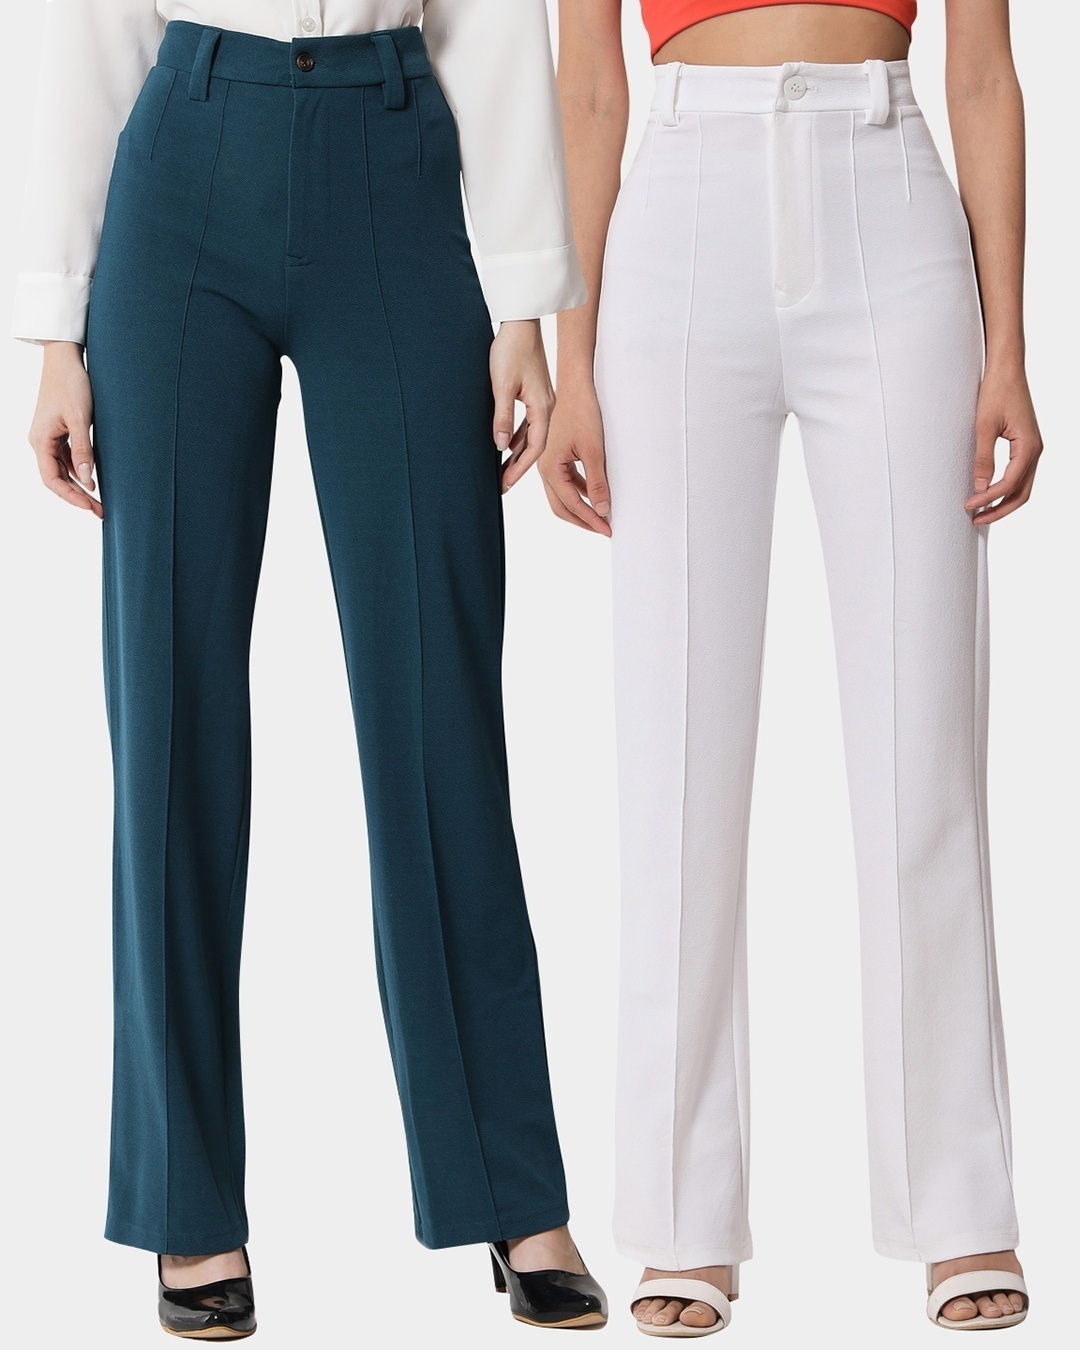 FAIWAD Women's Elegant High Waist Pants with Belt Straight Leg Work Office Suit  Trousers (Medium, Green) - Walmart.com